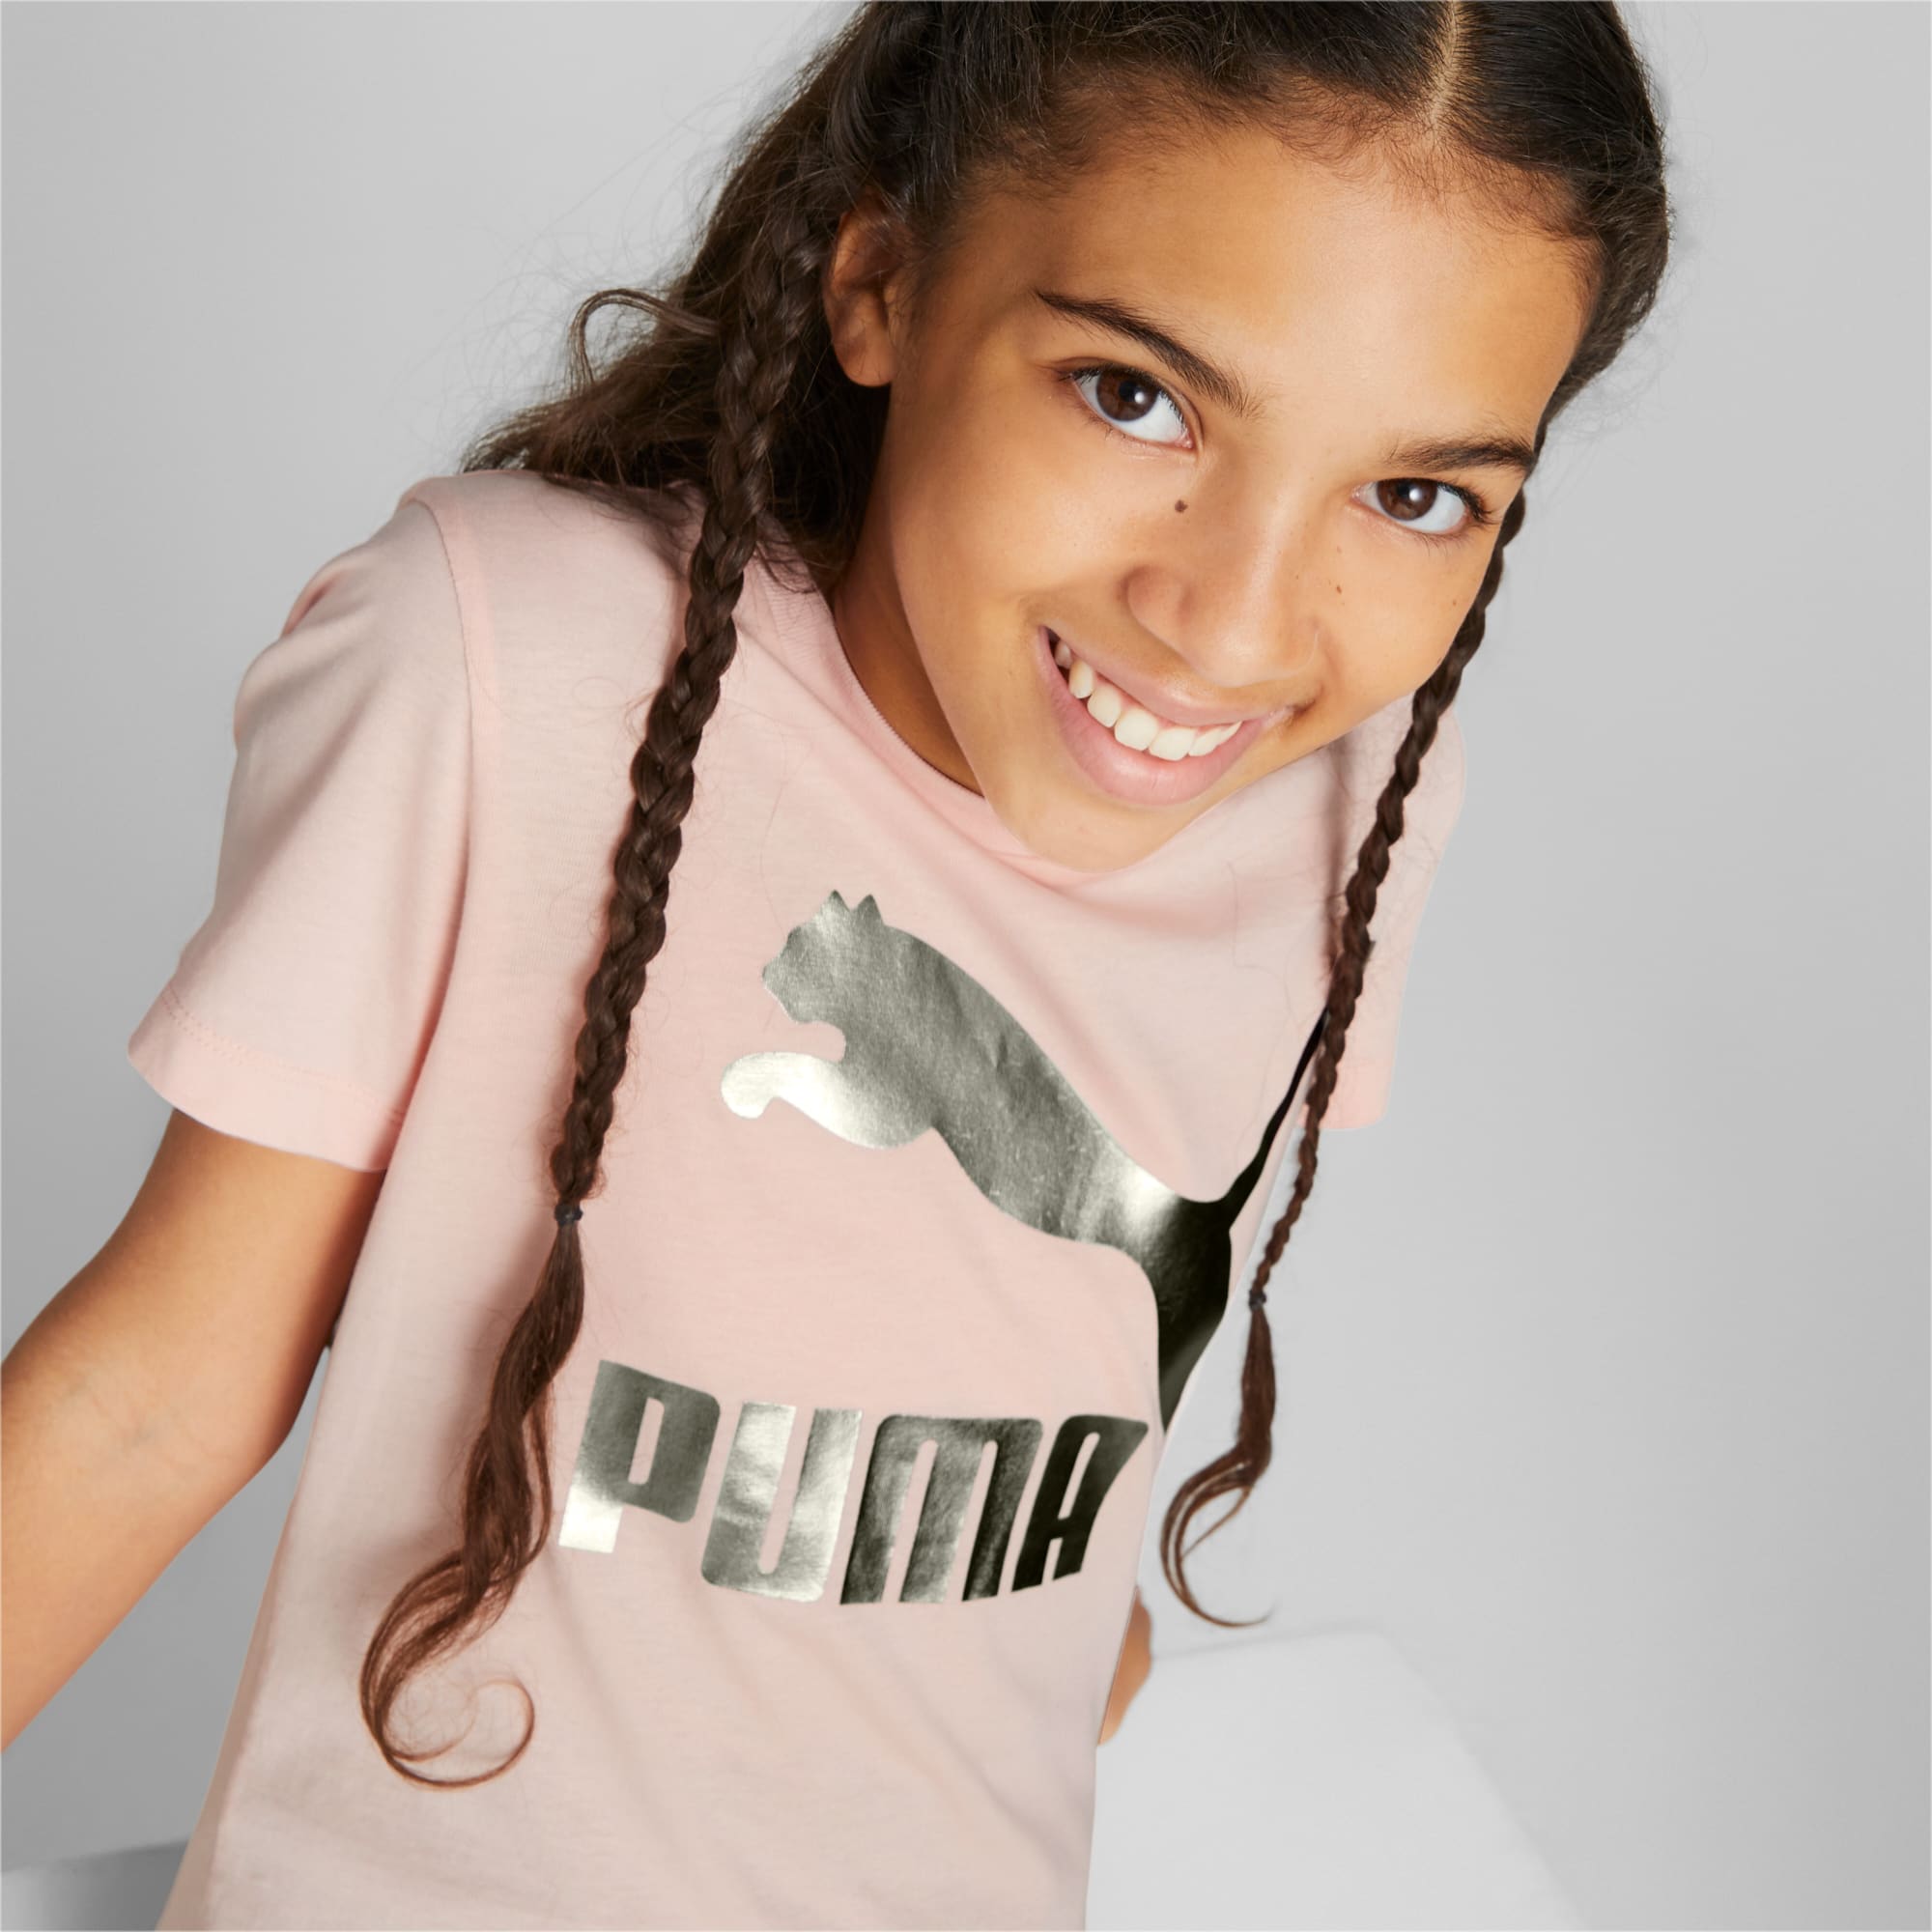 PUMA Classics Logo Jugend T-Shirt Für Kinder, Rosa, Größe: 164, Kleidung